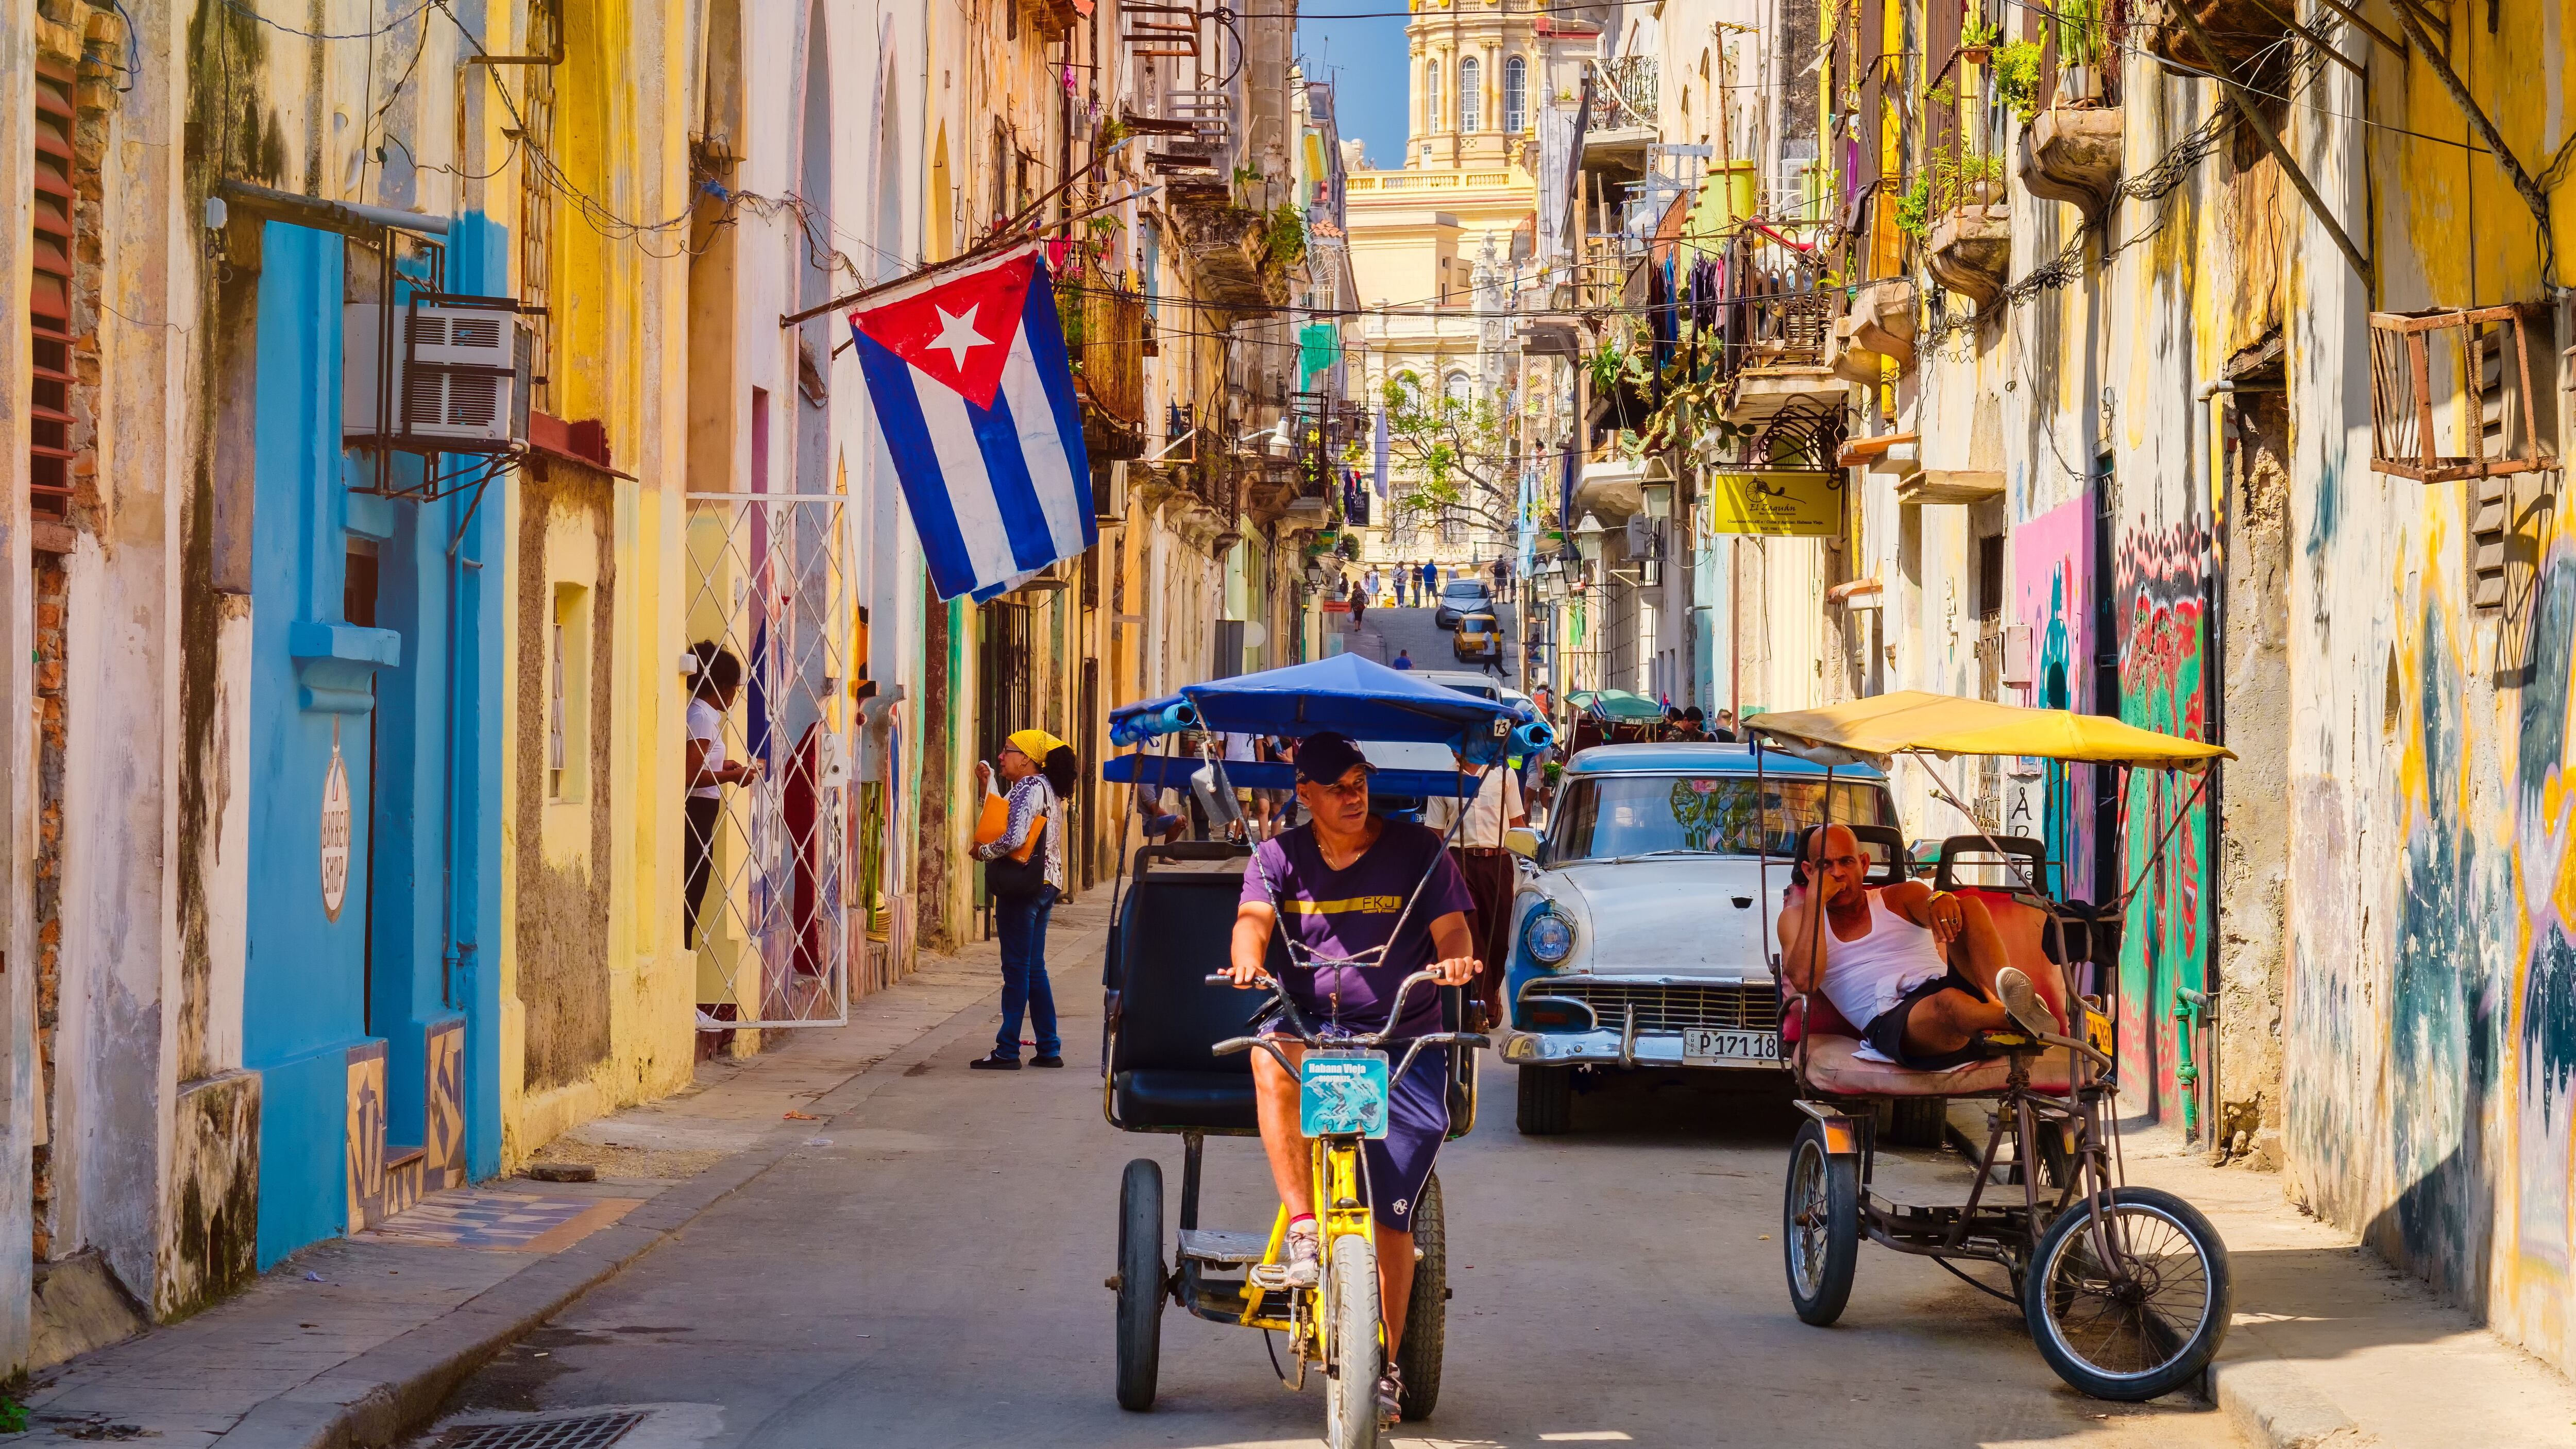 Una calle de La Habana, Cuba (Shutterstock)